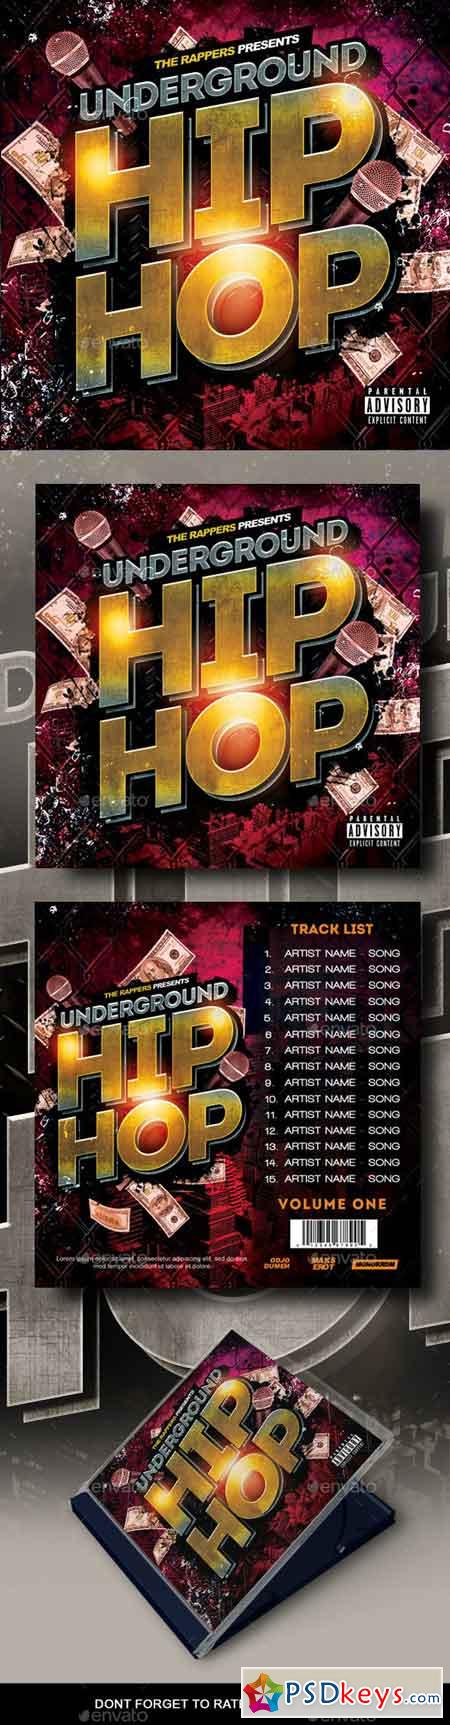 Hip Hop Mixtape Cover 22889524